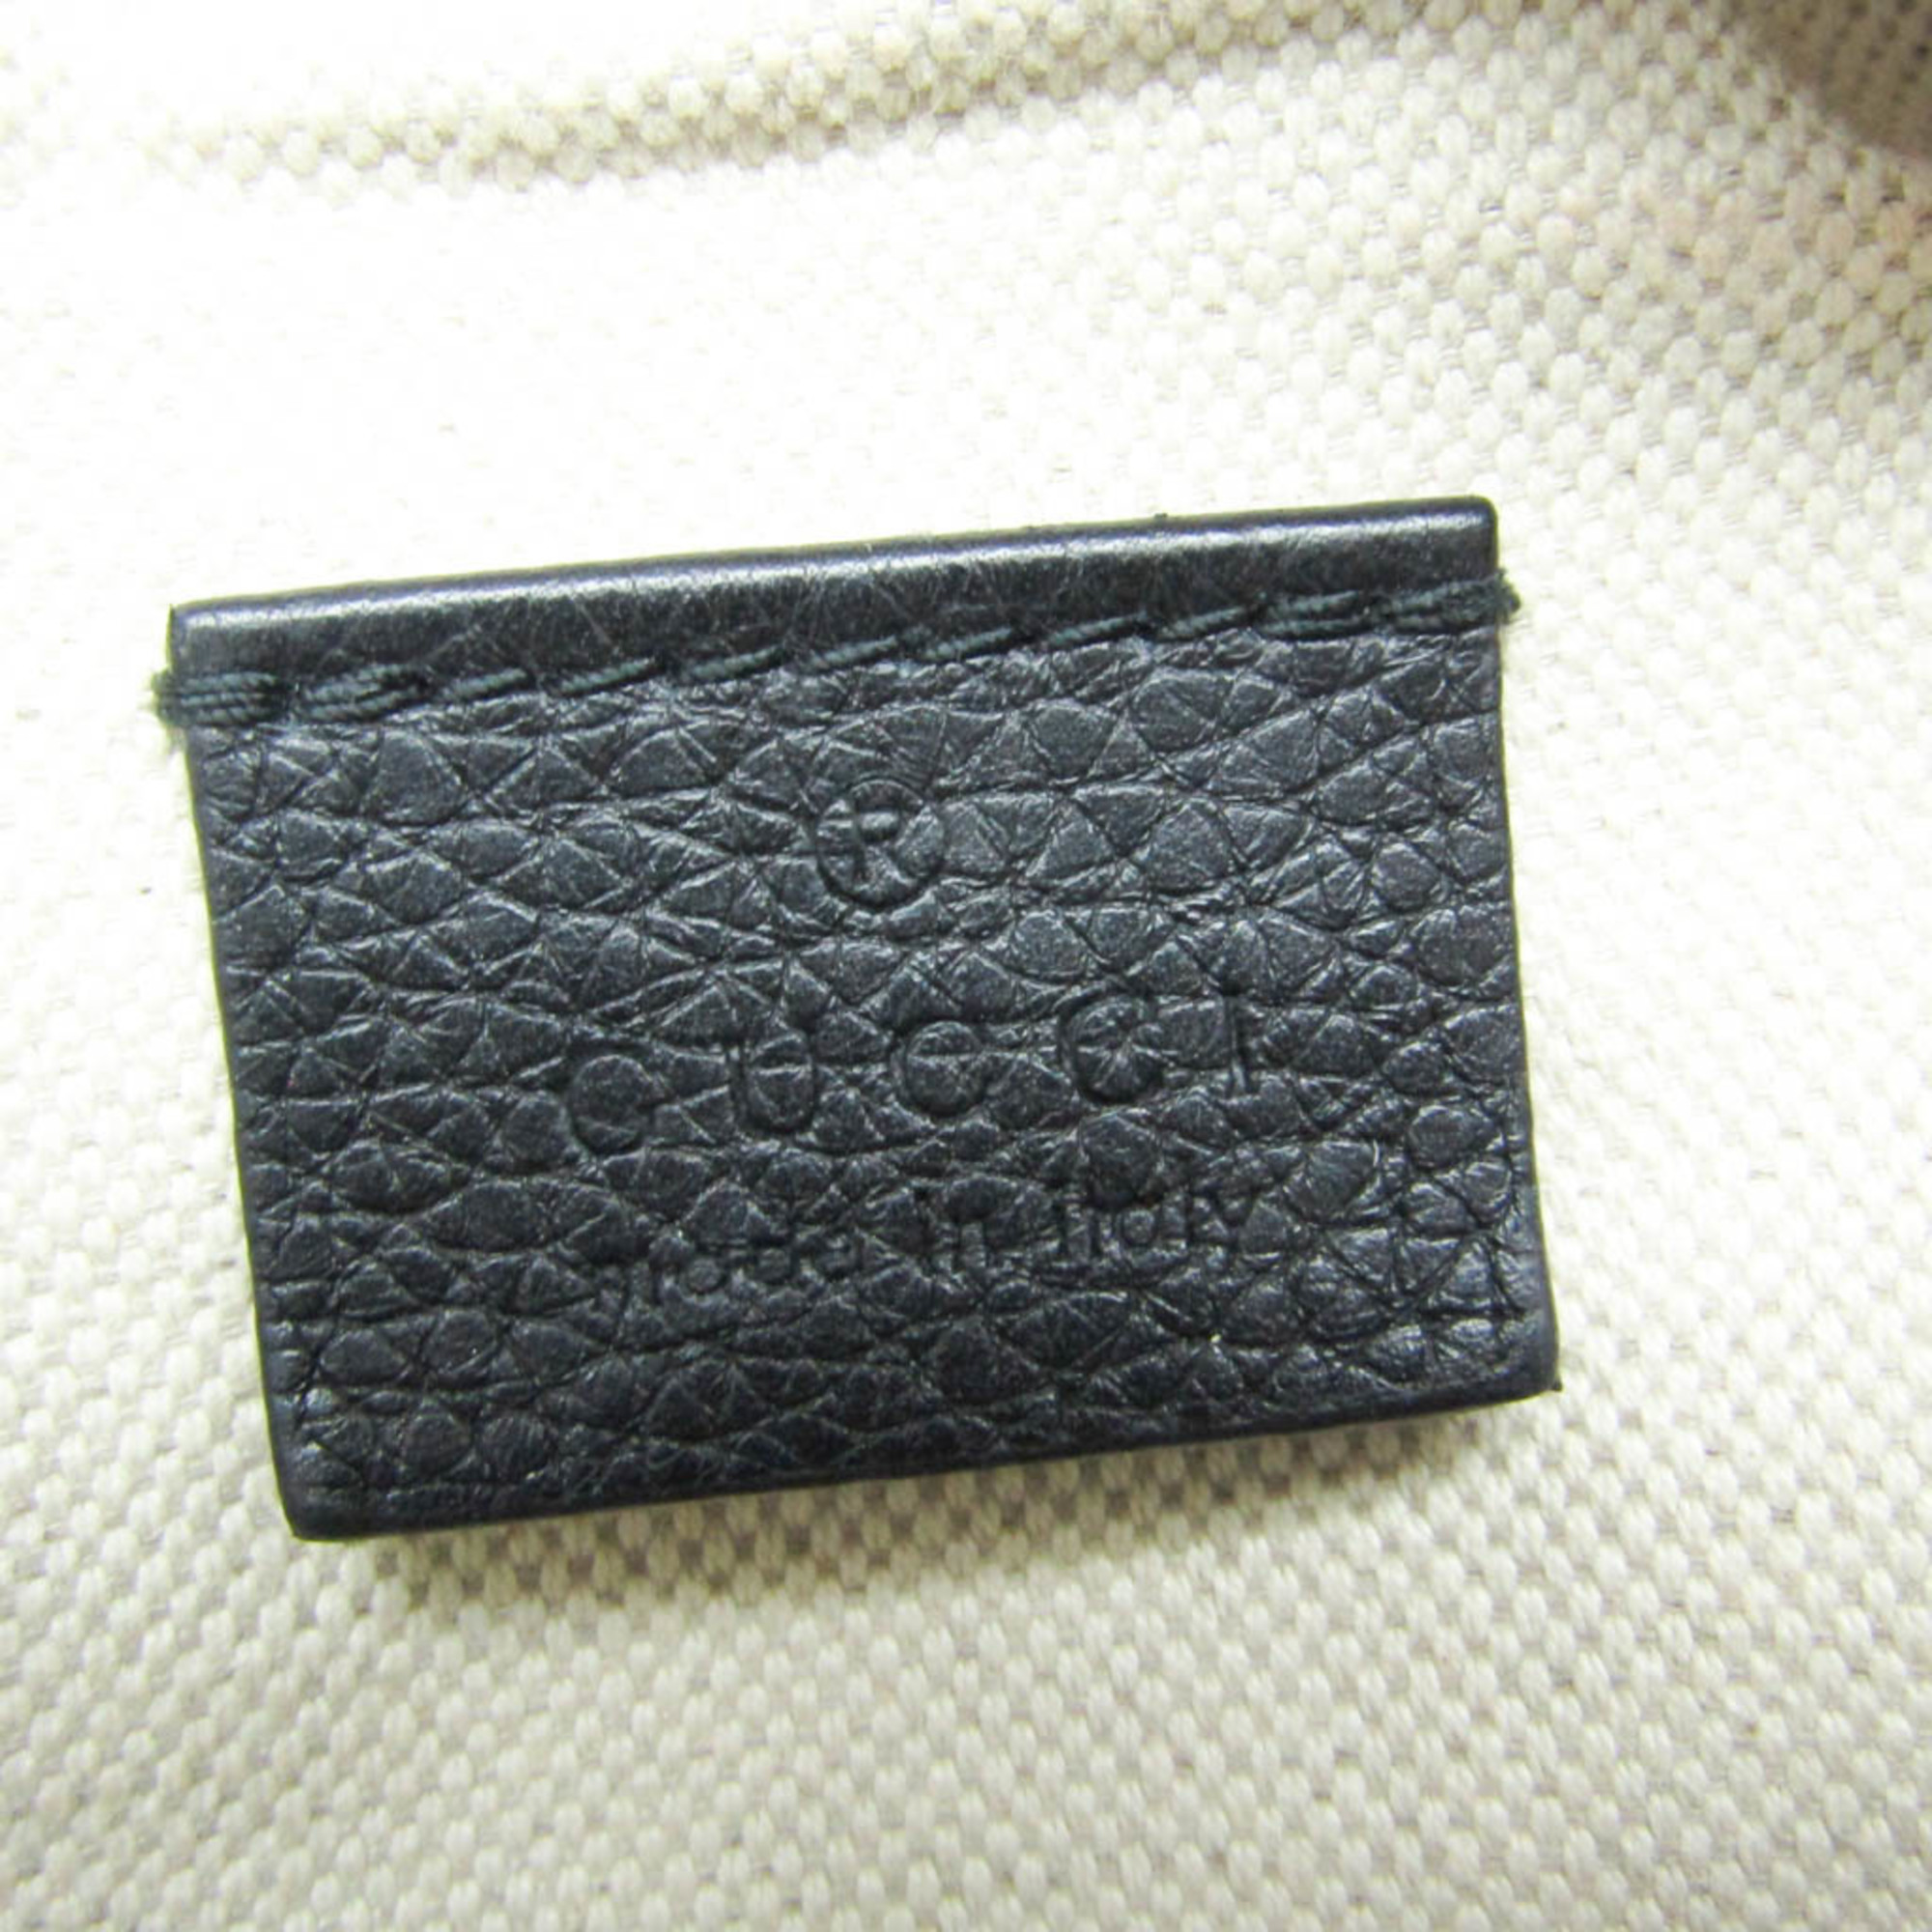 Gucci Print-small-belt-bag 527792 Women's Leather Fanny Pack Black